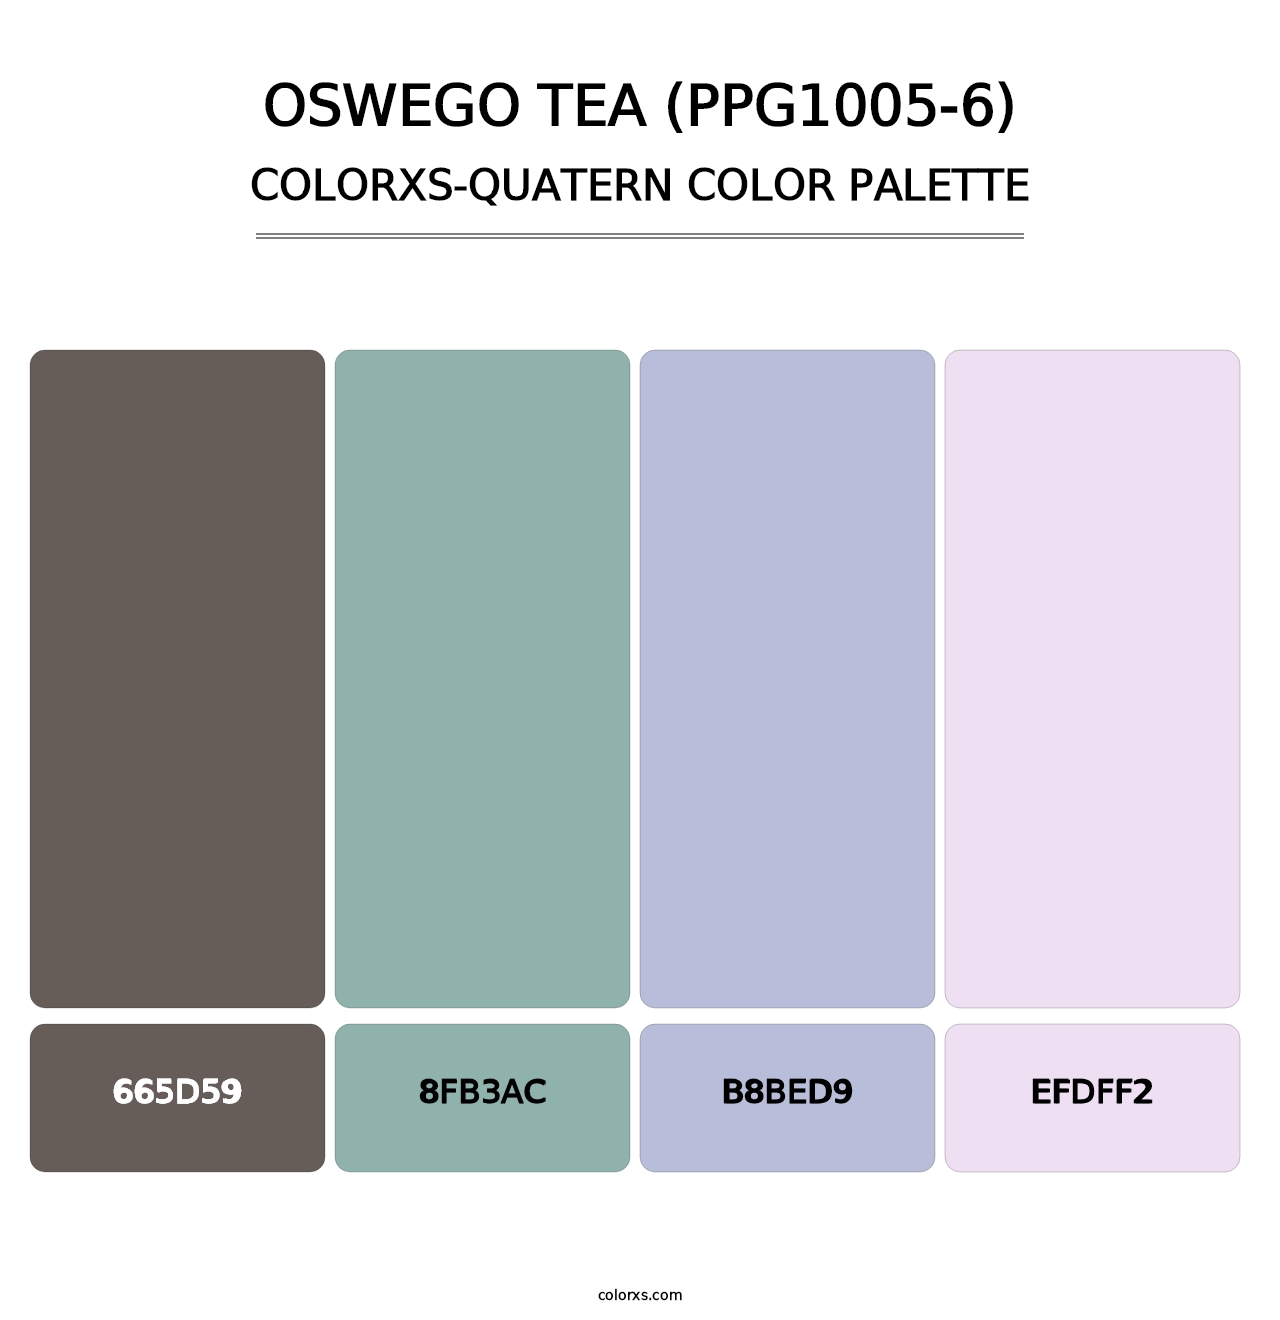 Oswego Tea (PPG1005-6) - Colorxs Quatern Palette